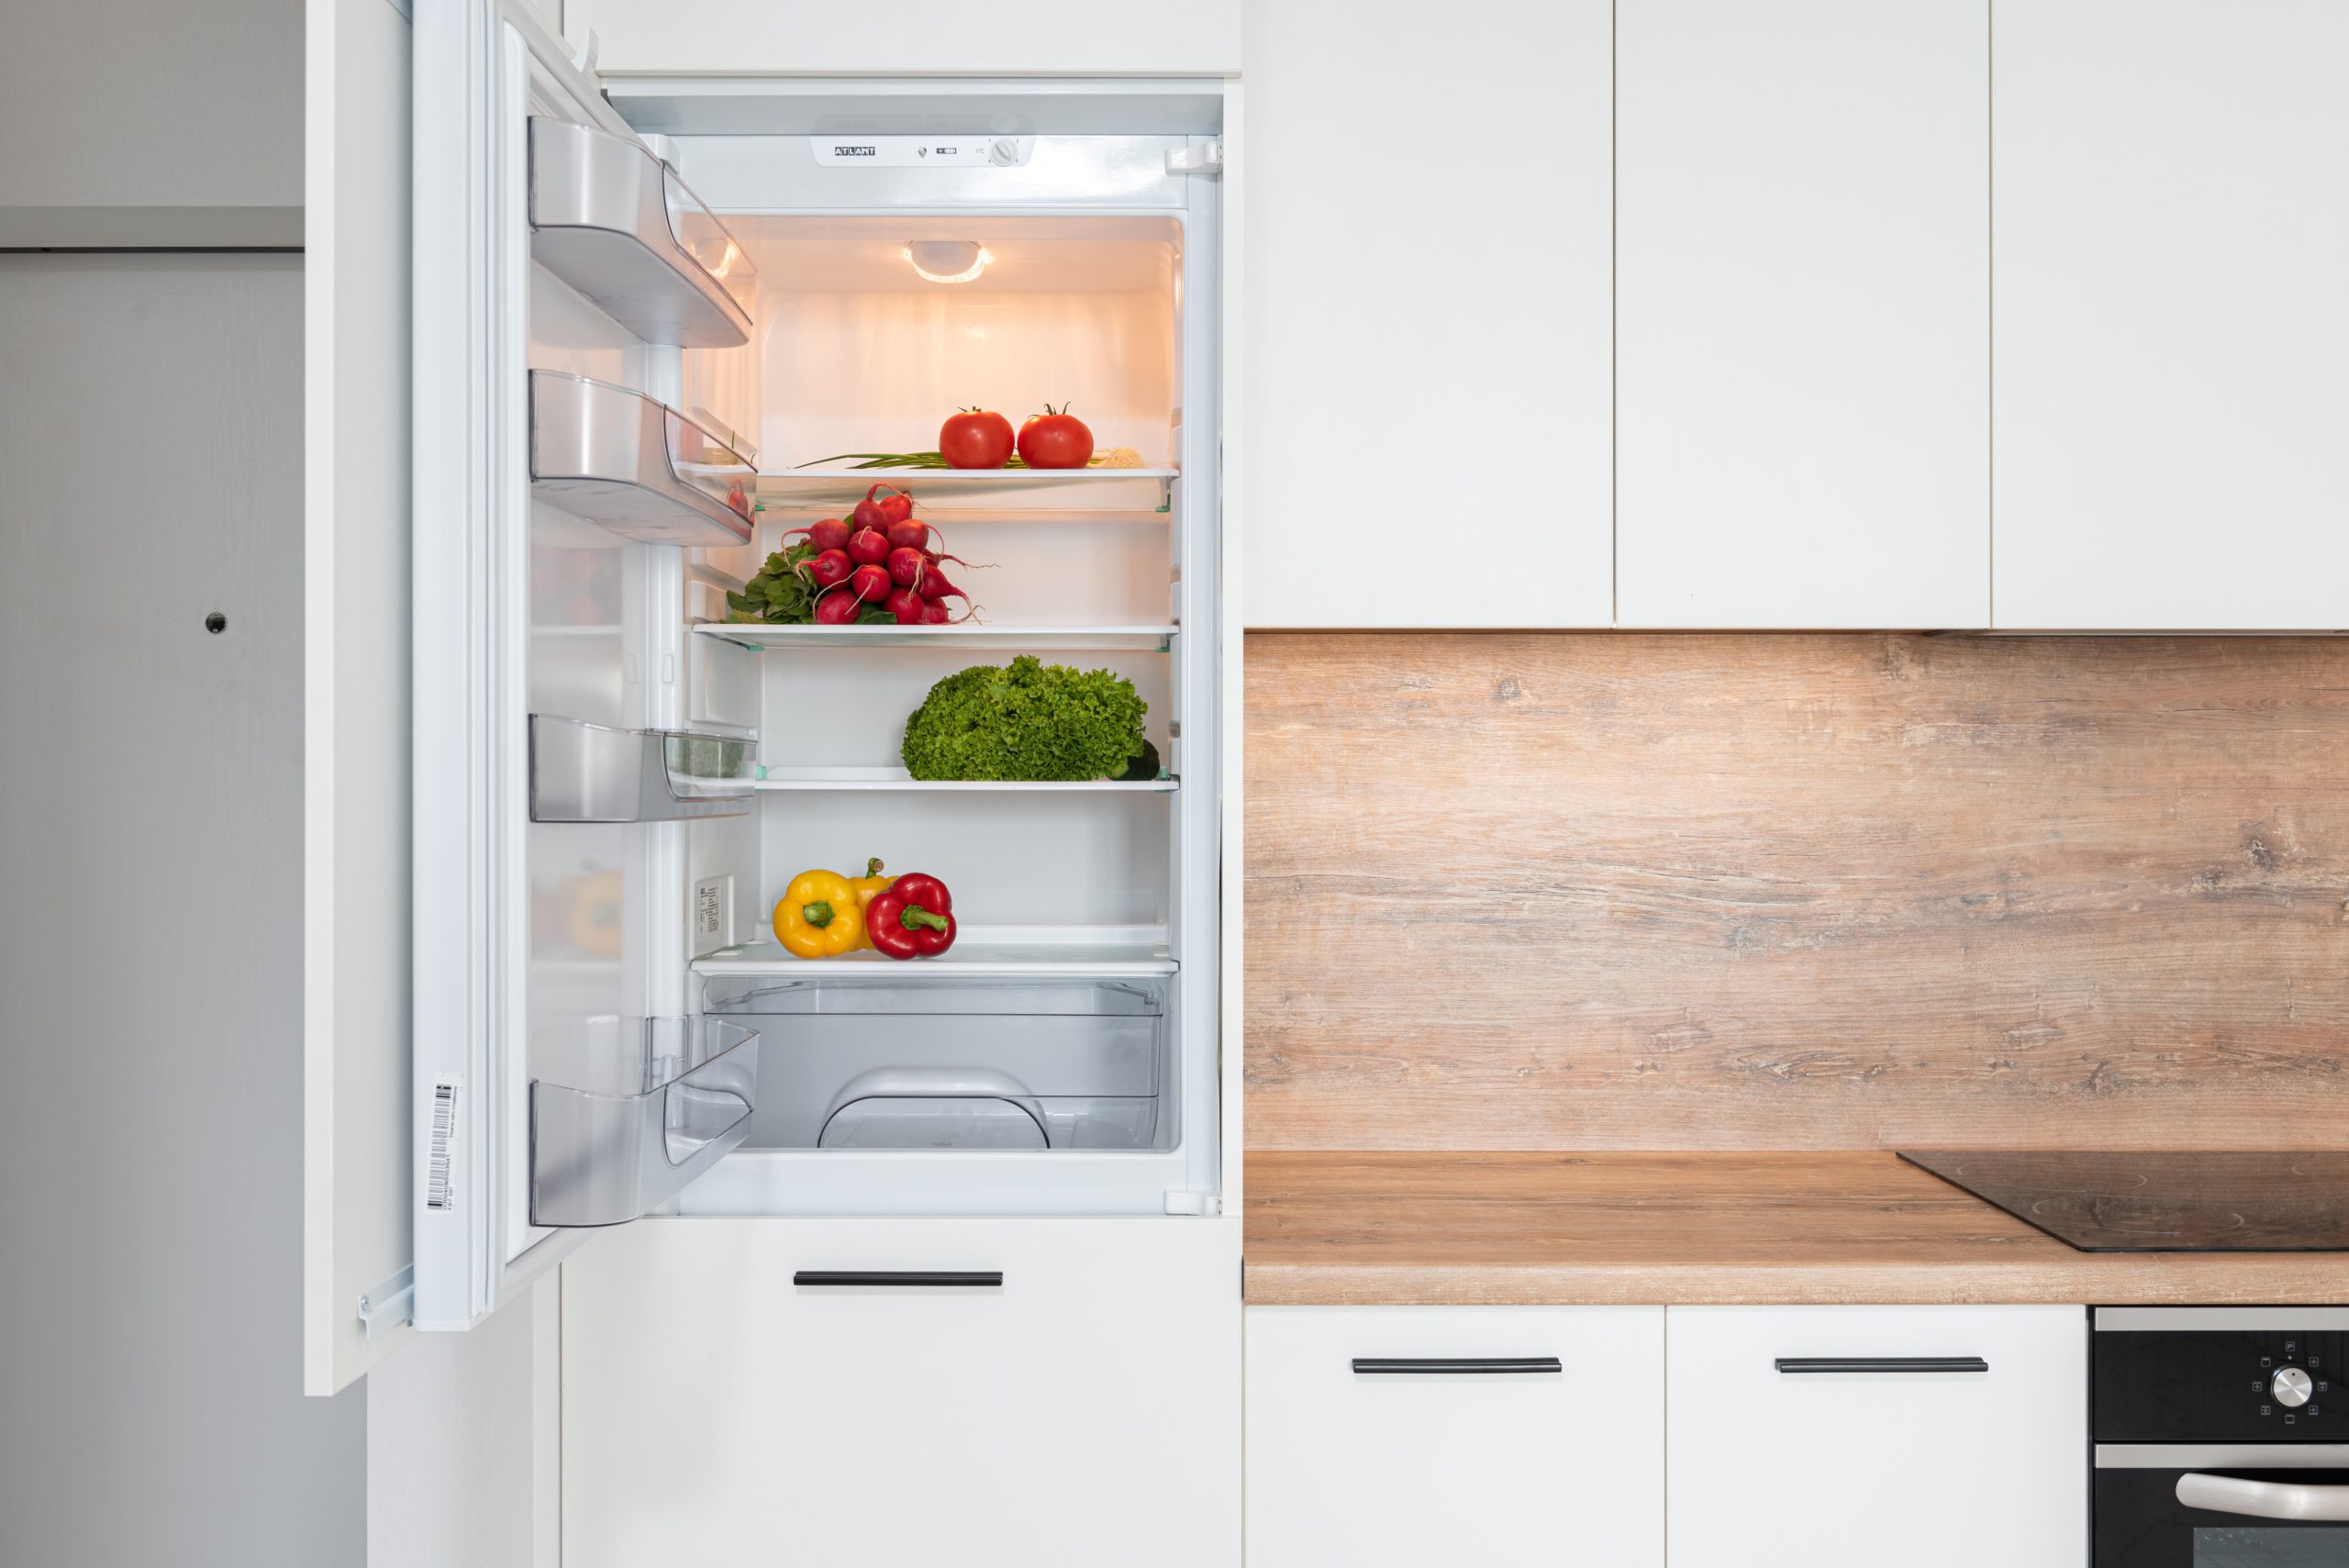 Make space in the fridge